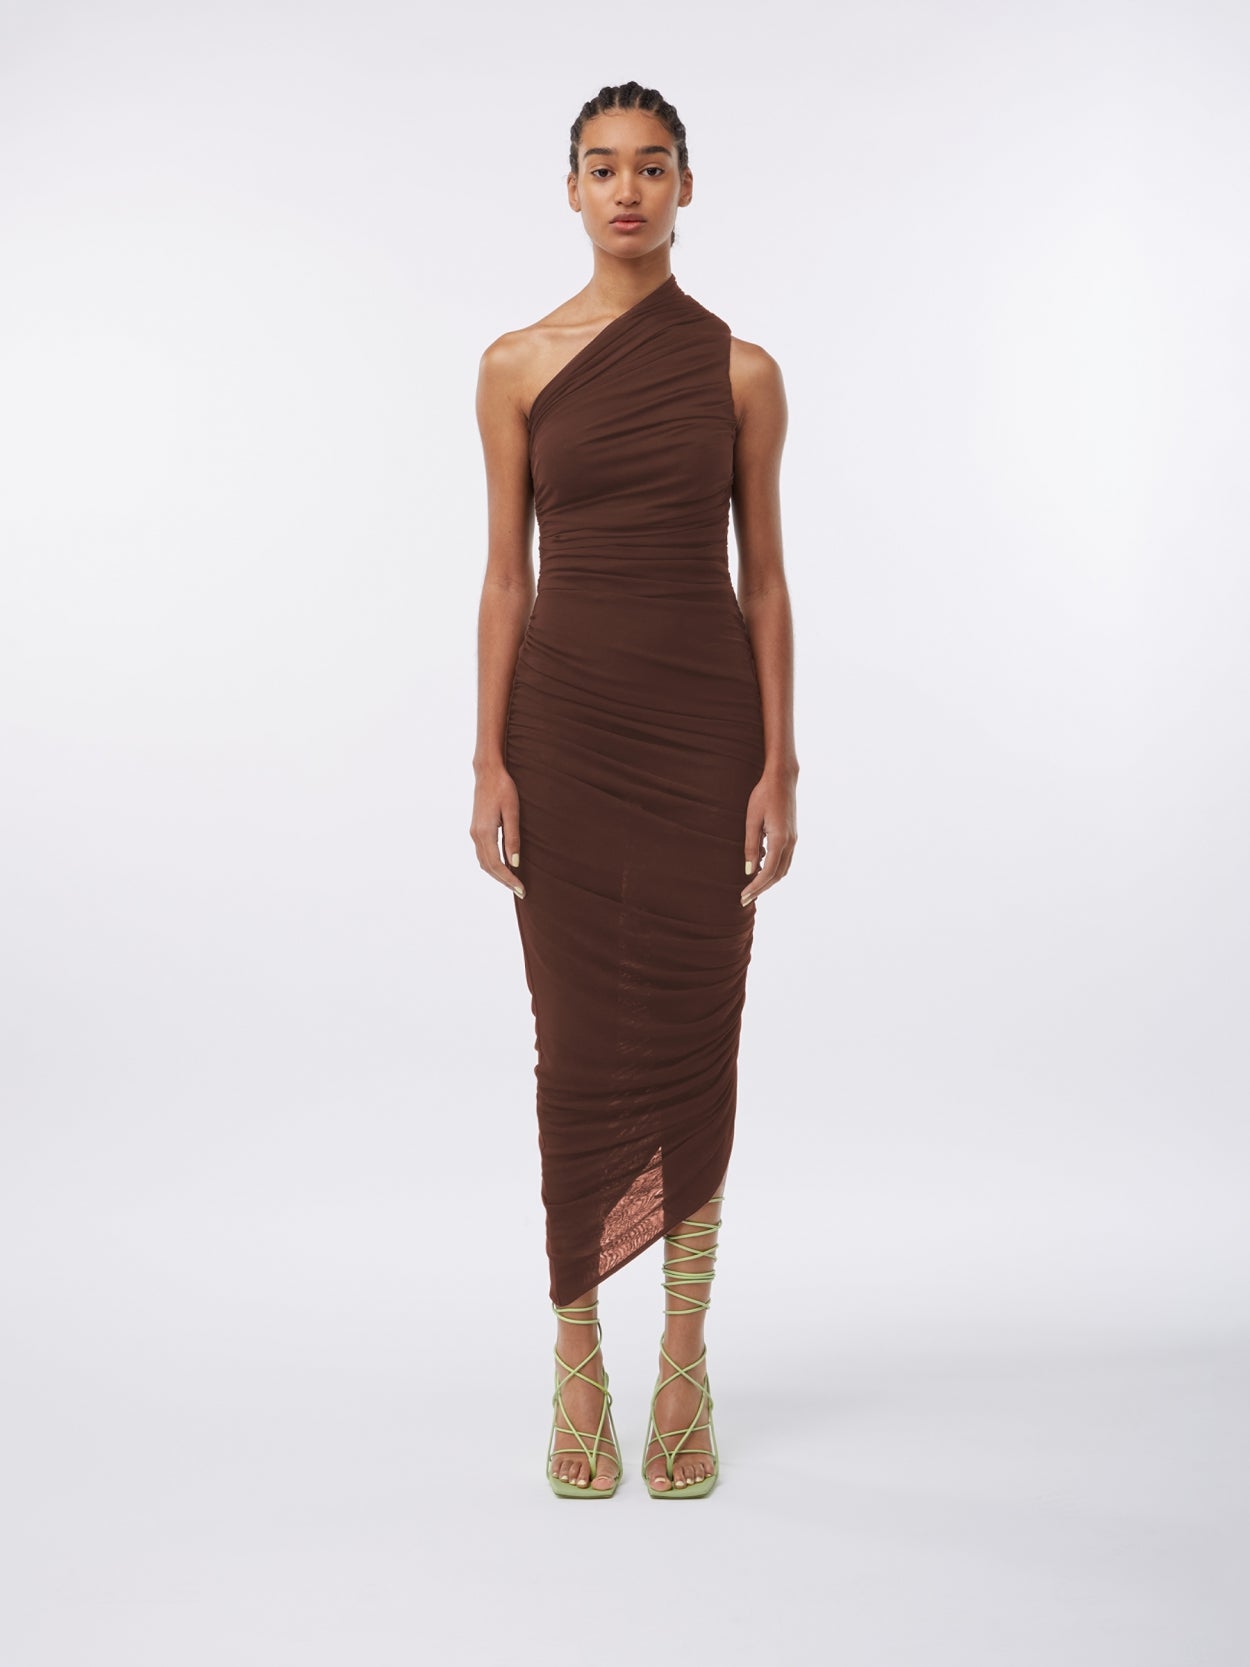 model wearing a one shoulder draped brown dress